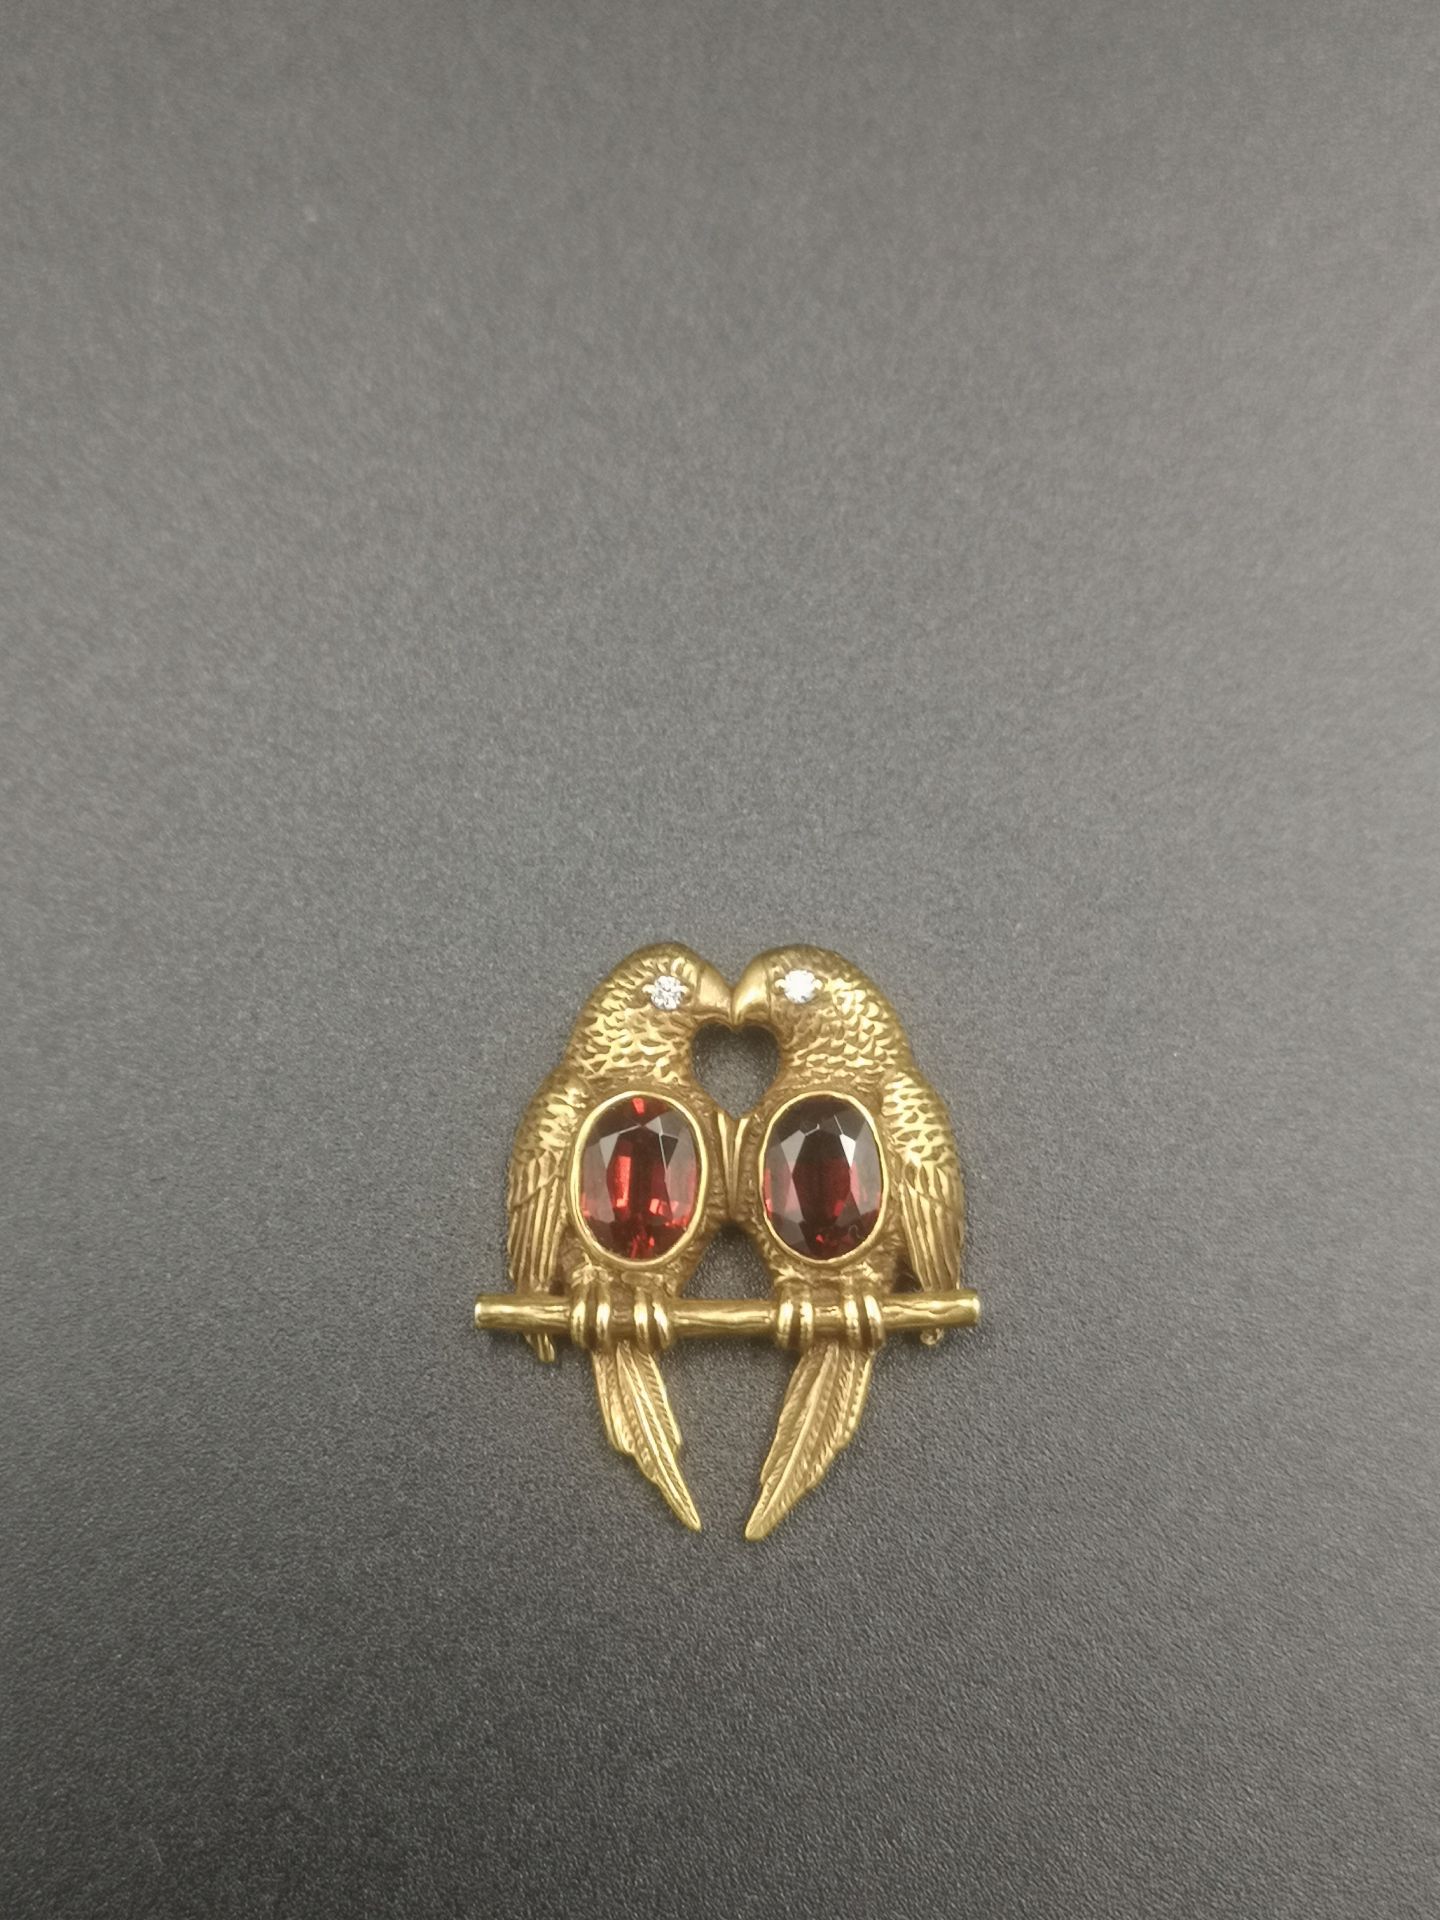 14ct gold, garnet and diamond brooch - Image 3 of 4